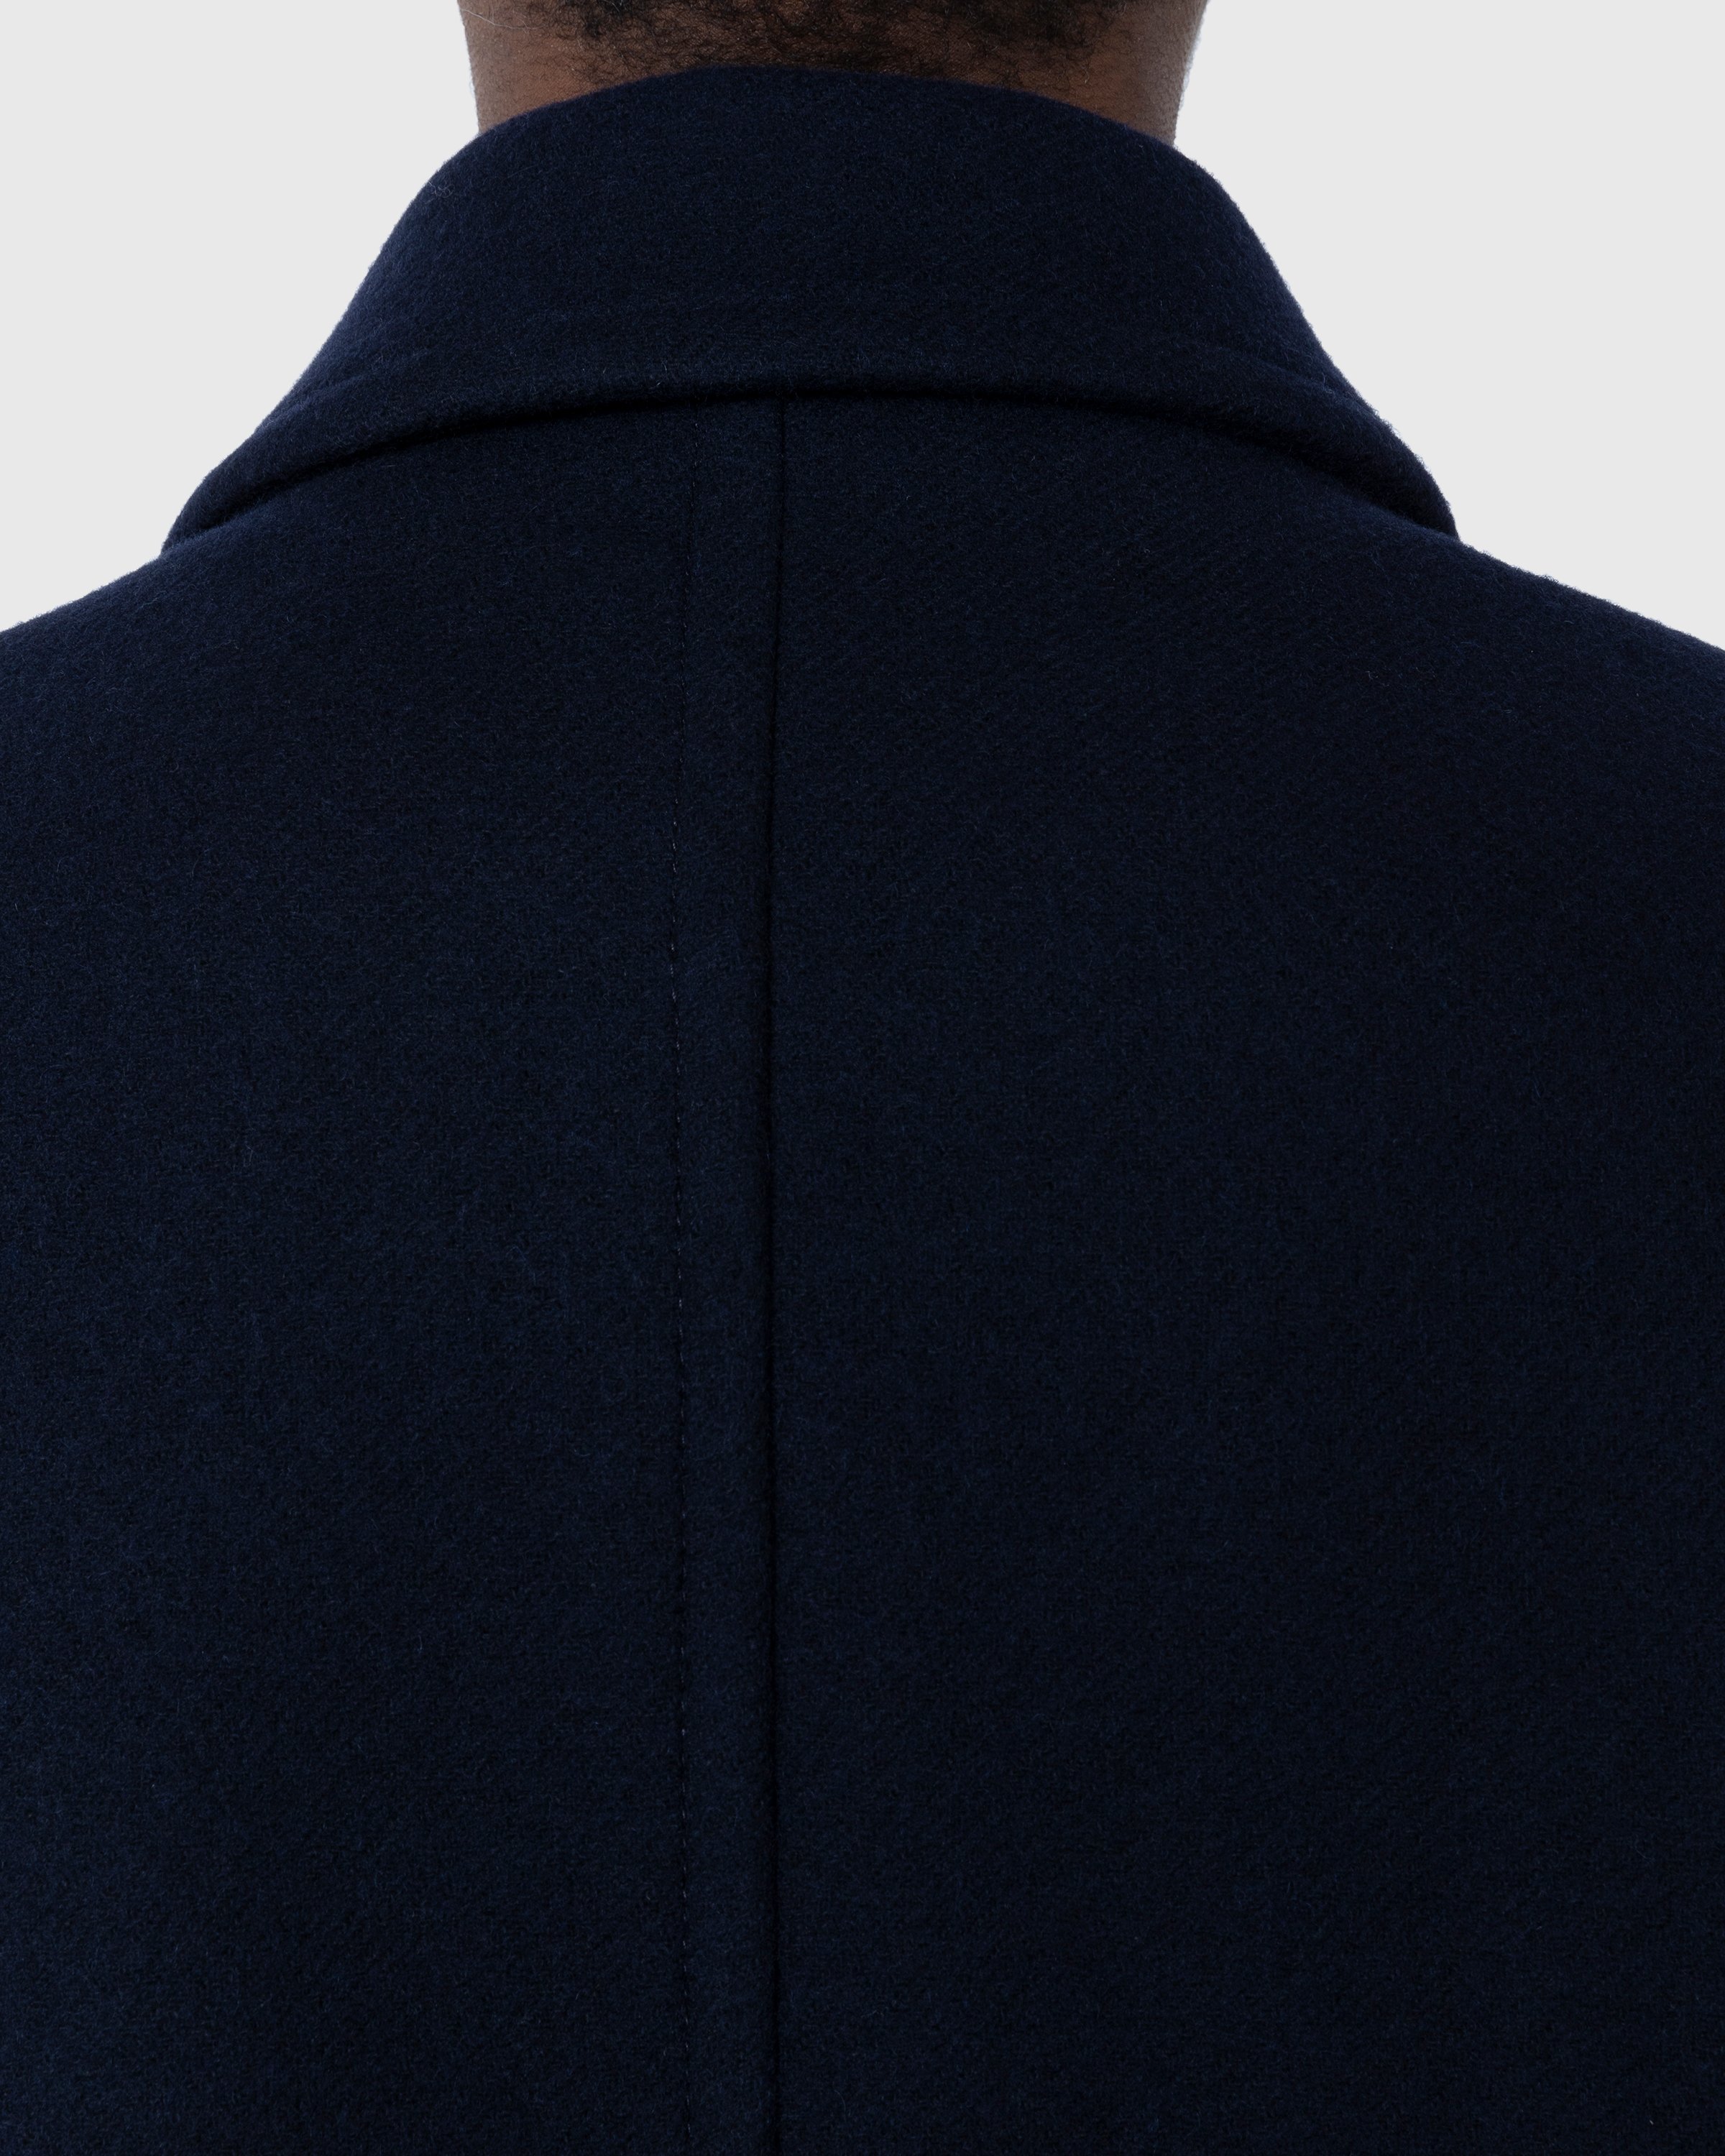 Dries van Noten - Ronnor Workwear Jacket Navy - Clothing - Blue - Image 6